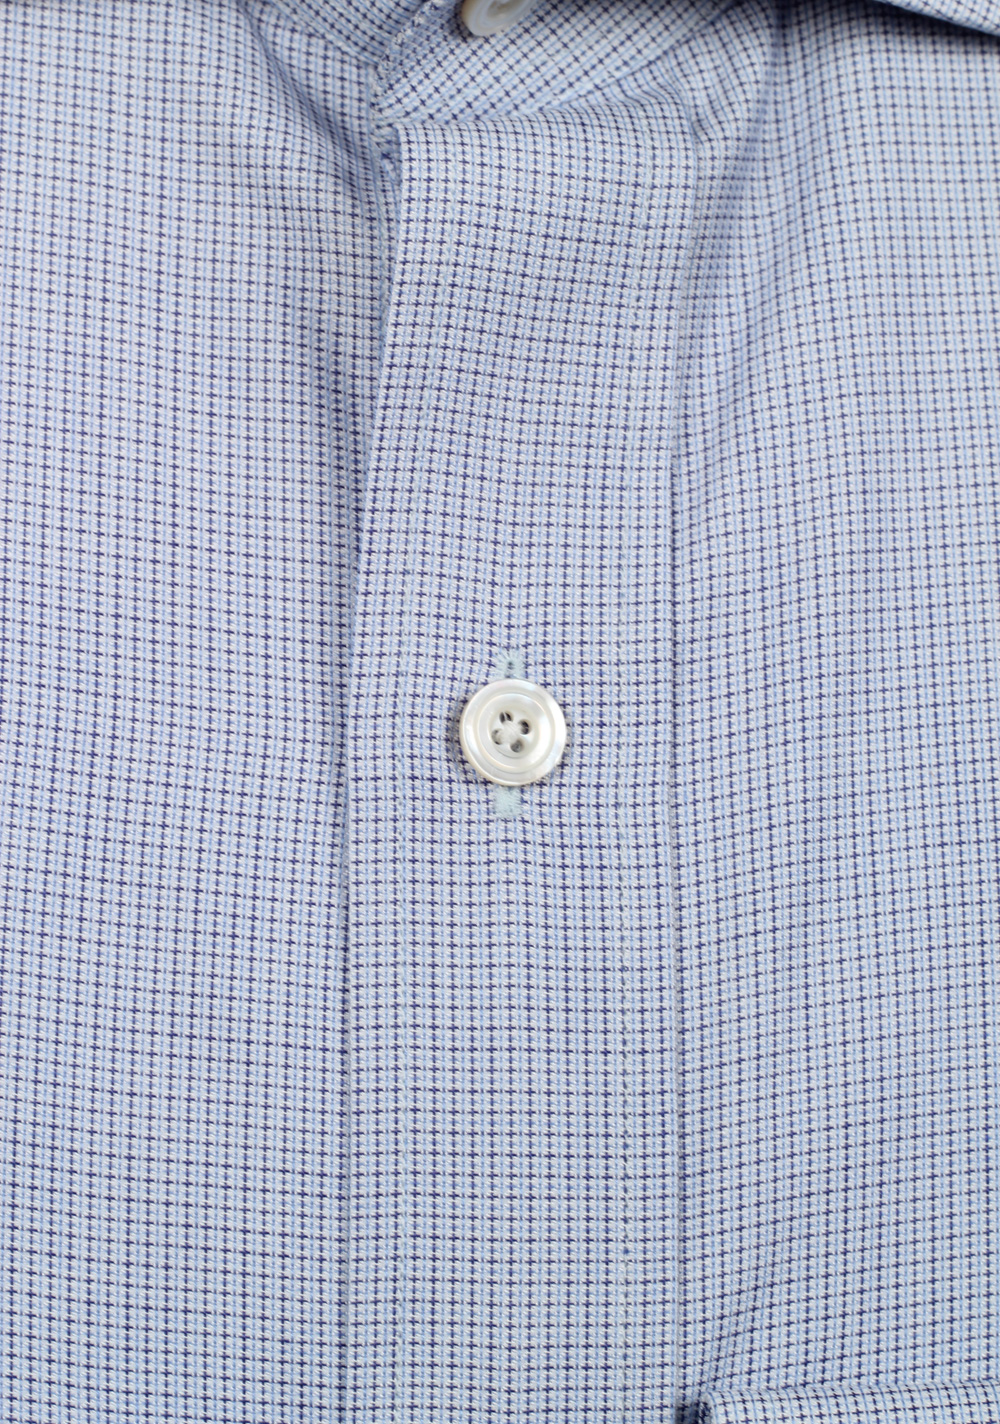 TOM FORD Checked White Blue Shirt Size 39 / 15,5 U.S. | Costume Limité